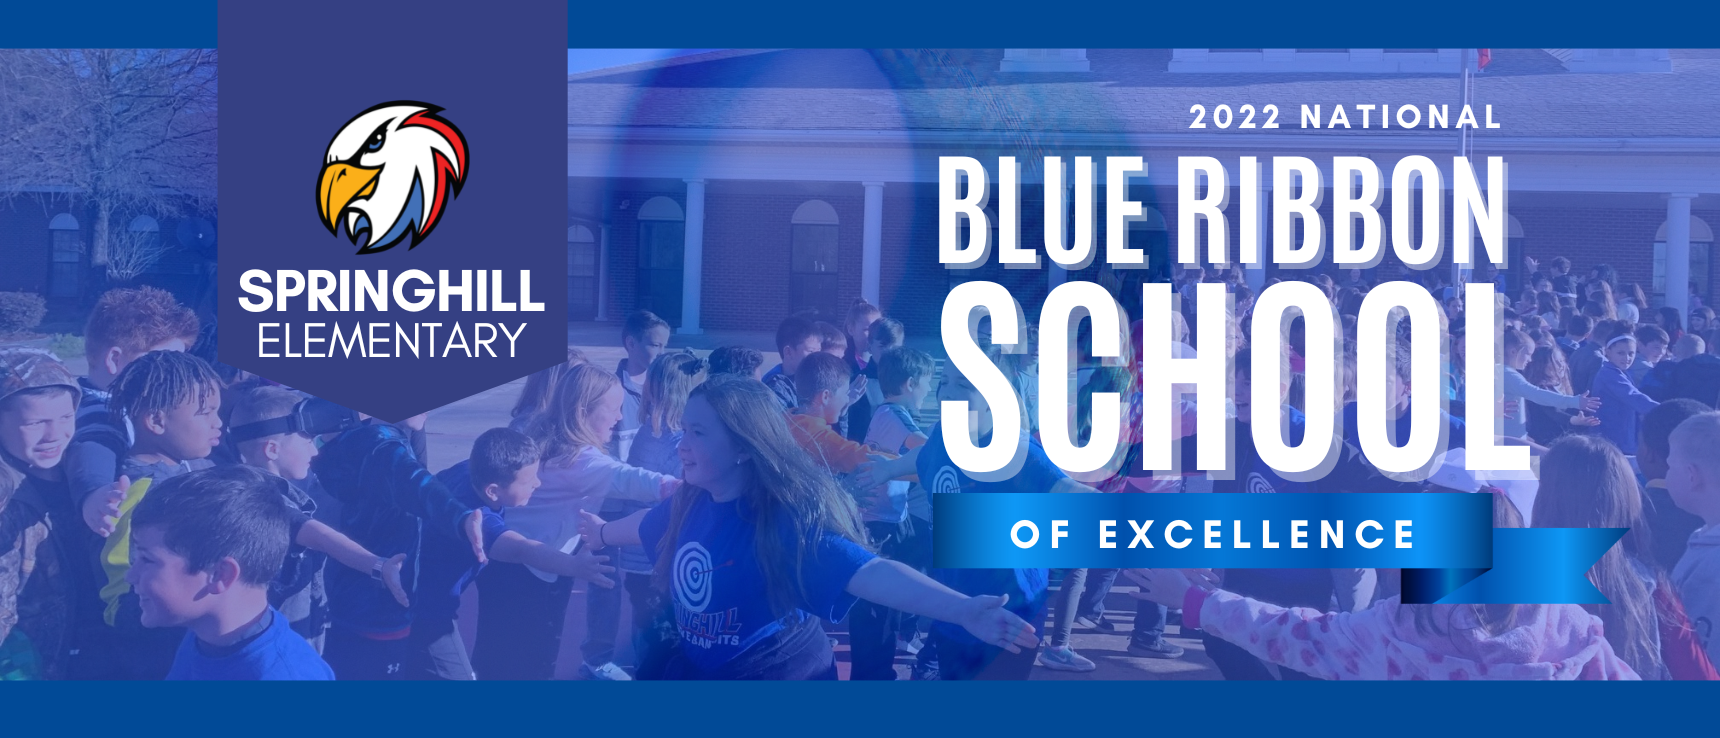 springhill blue ribbon school web banner